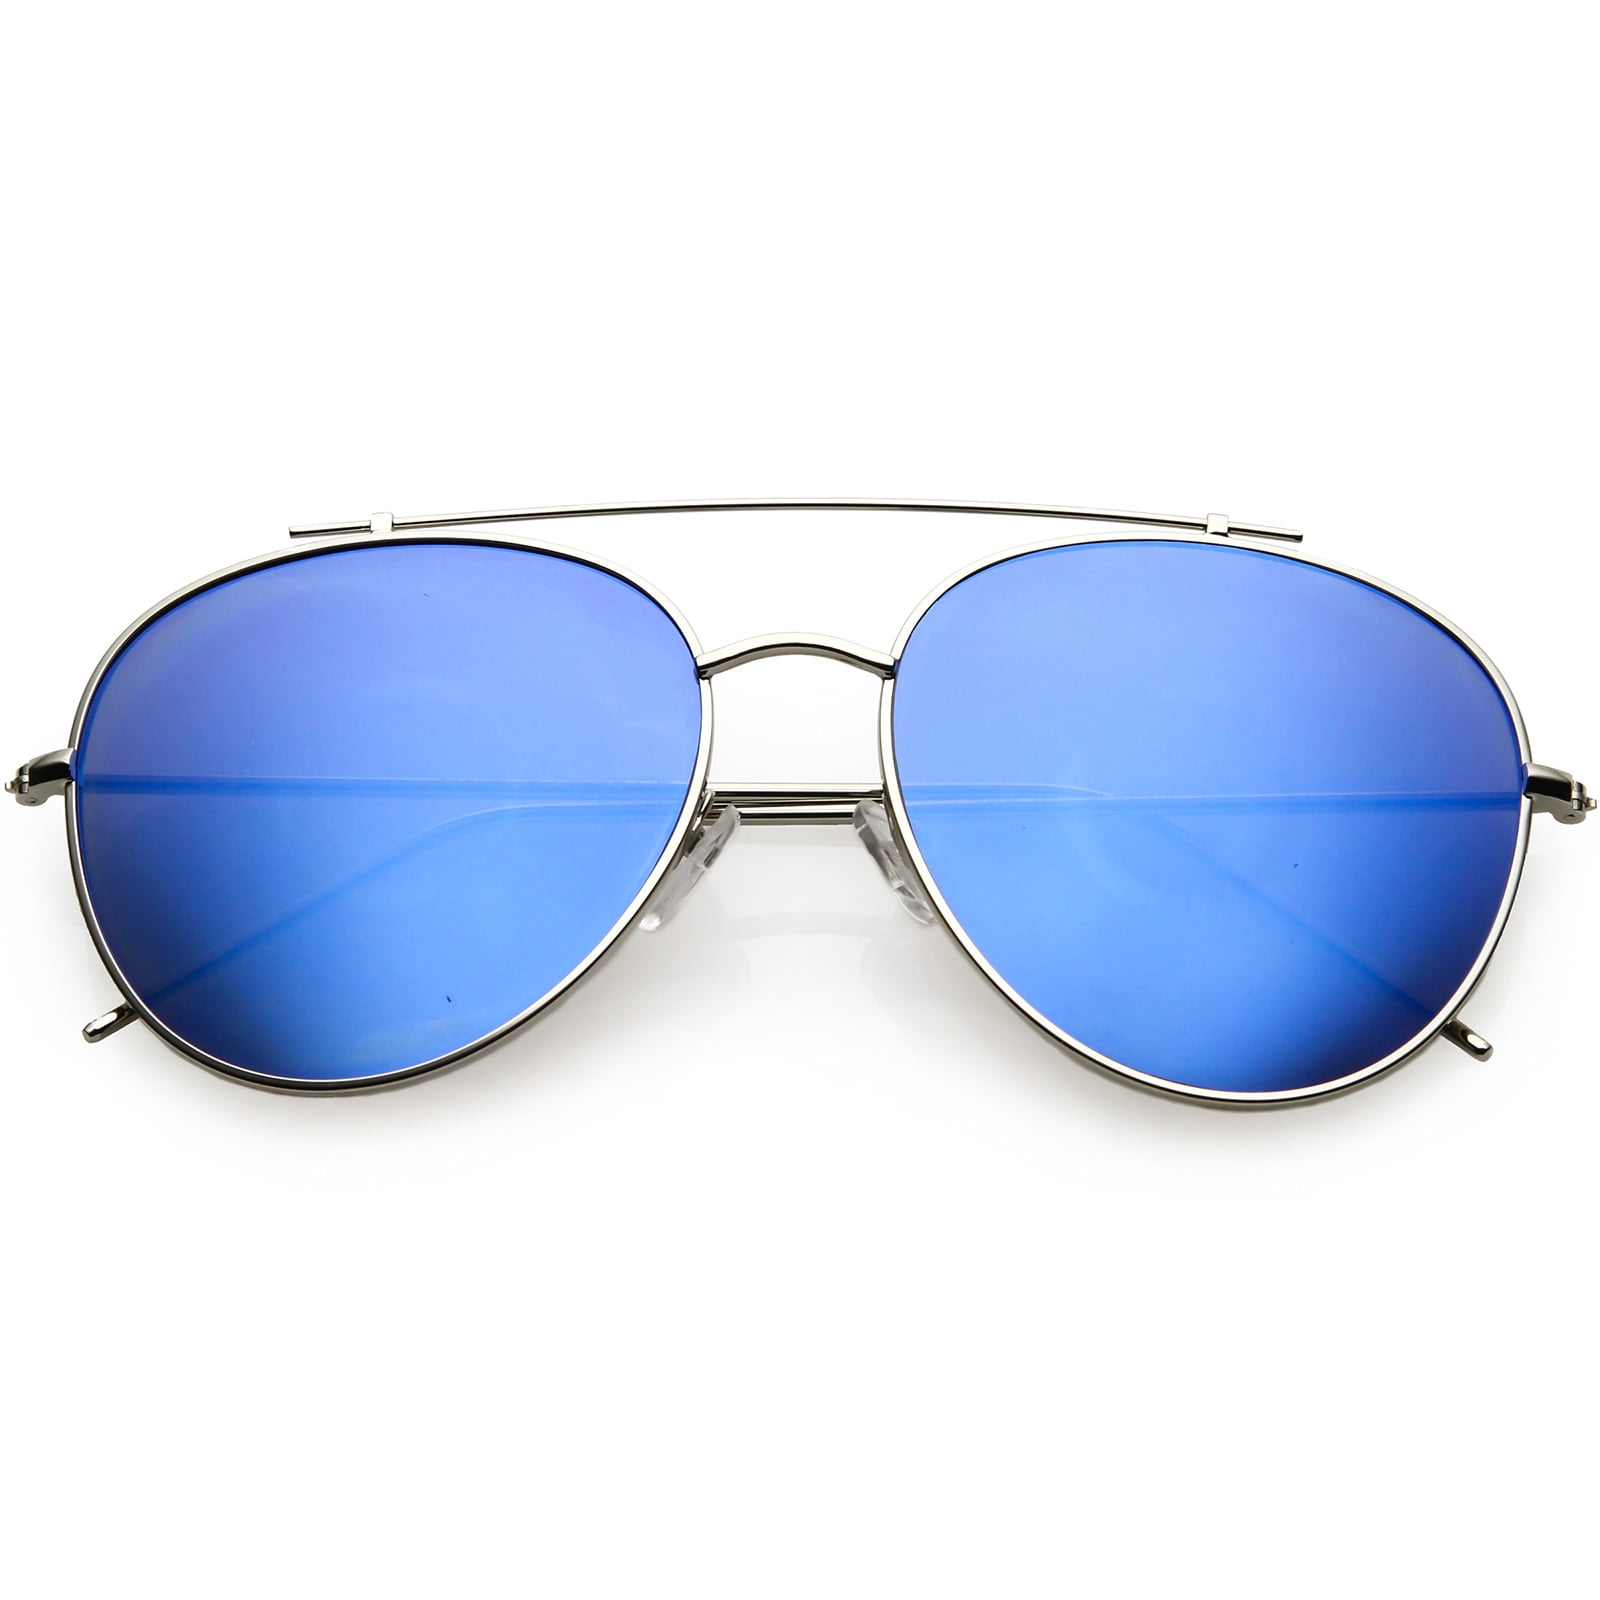 Oversize Metal Aviator Sunglasses Mirrored Round Lens 60mm Silver Blue Mirror